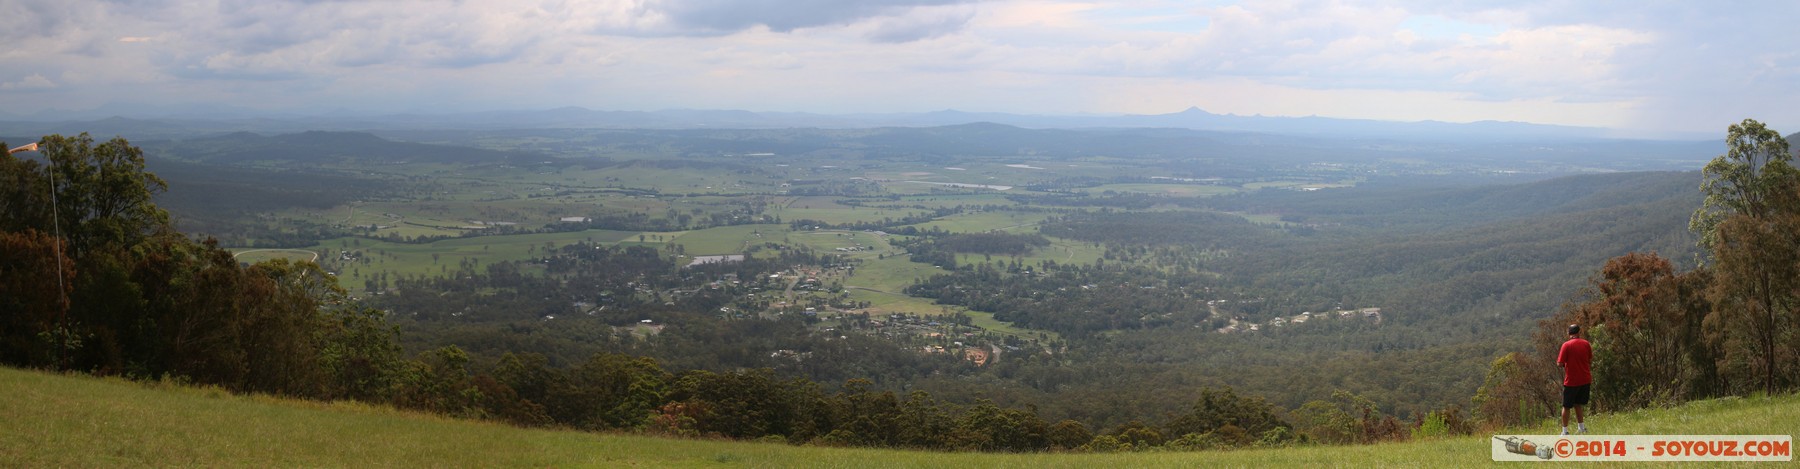 Tamborine Mountain - panorama
Stitched Panorama
Mots-clés: AUS Australie geo:lat=-27.95035422 geo:lon=153.18119716 geotagged North Tamborine Queensland Wonglepong panorama